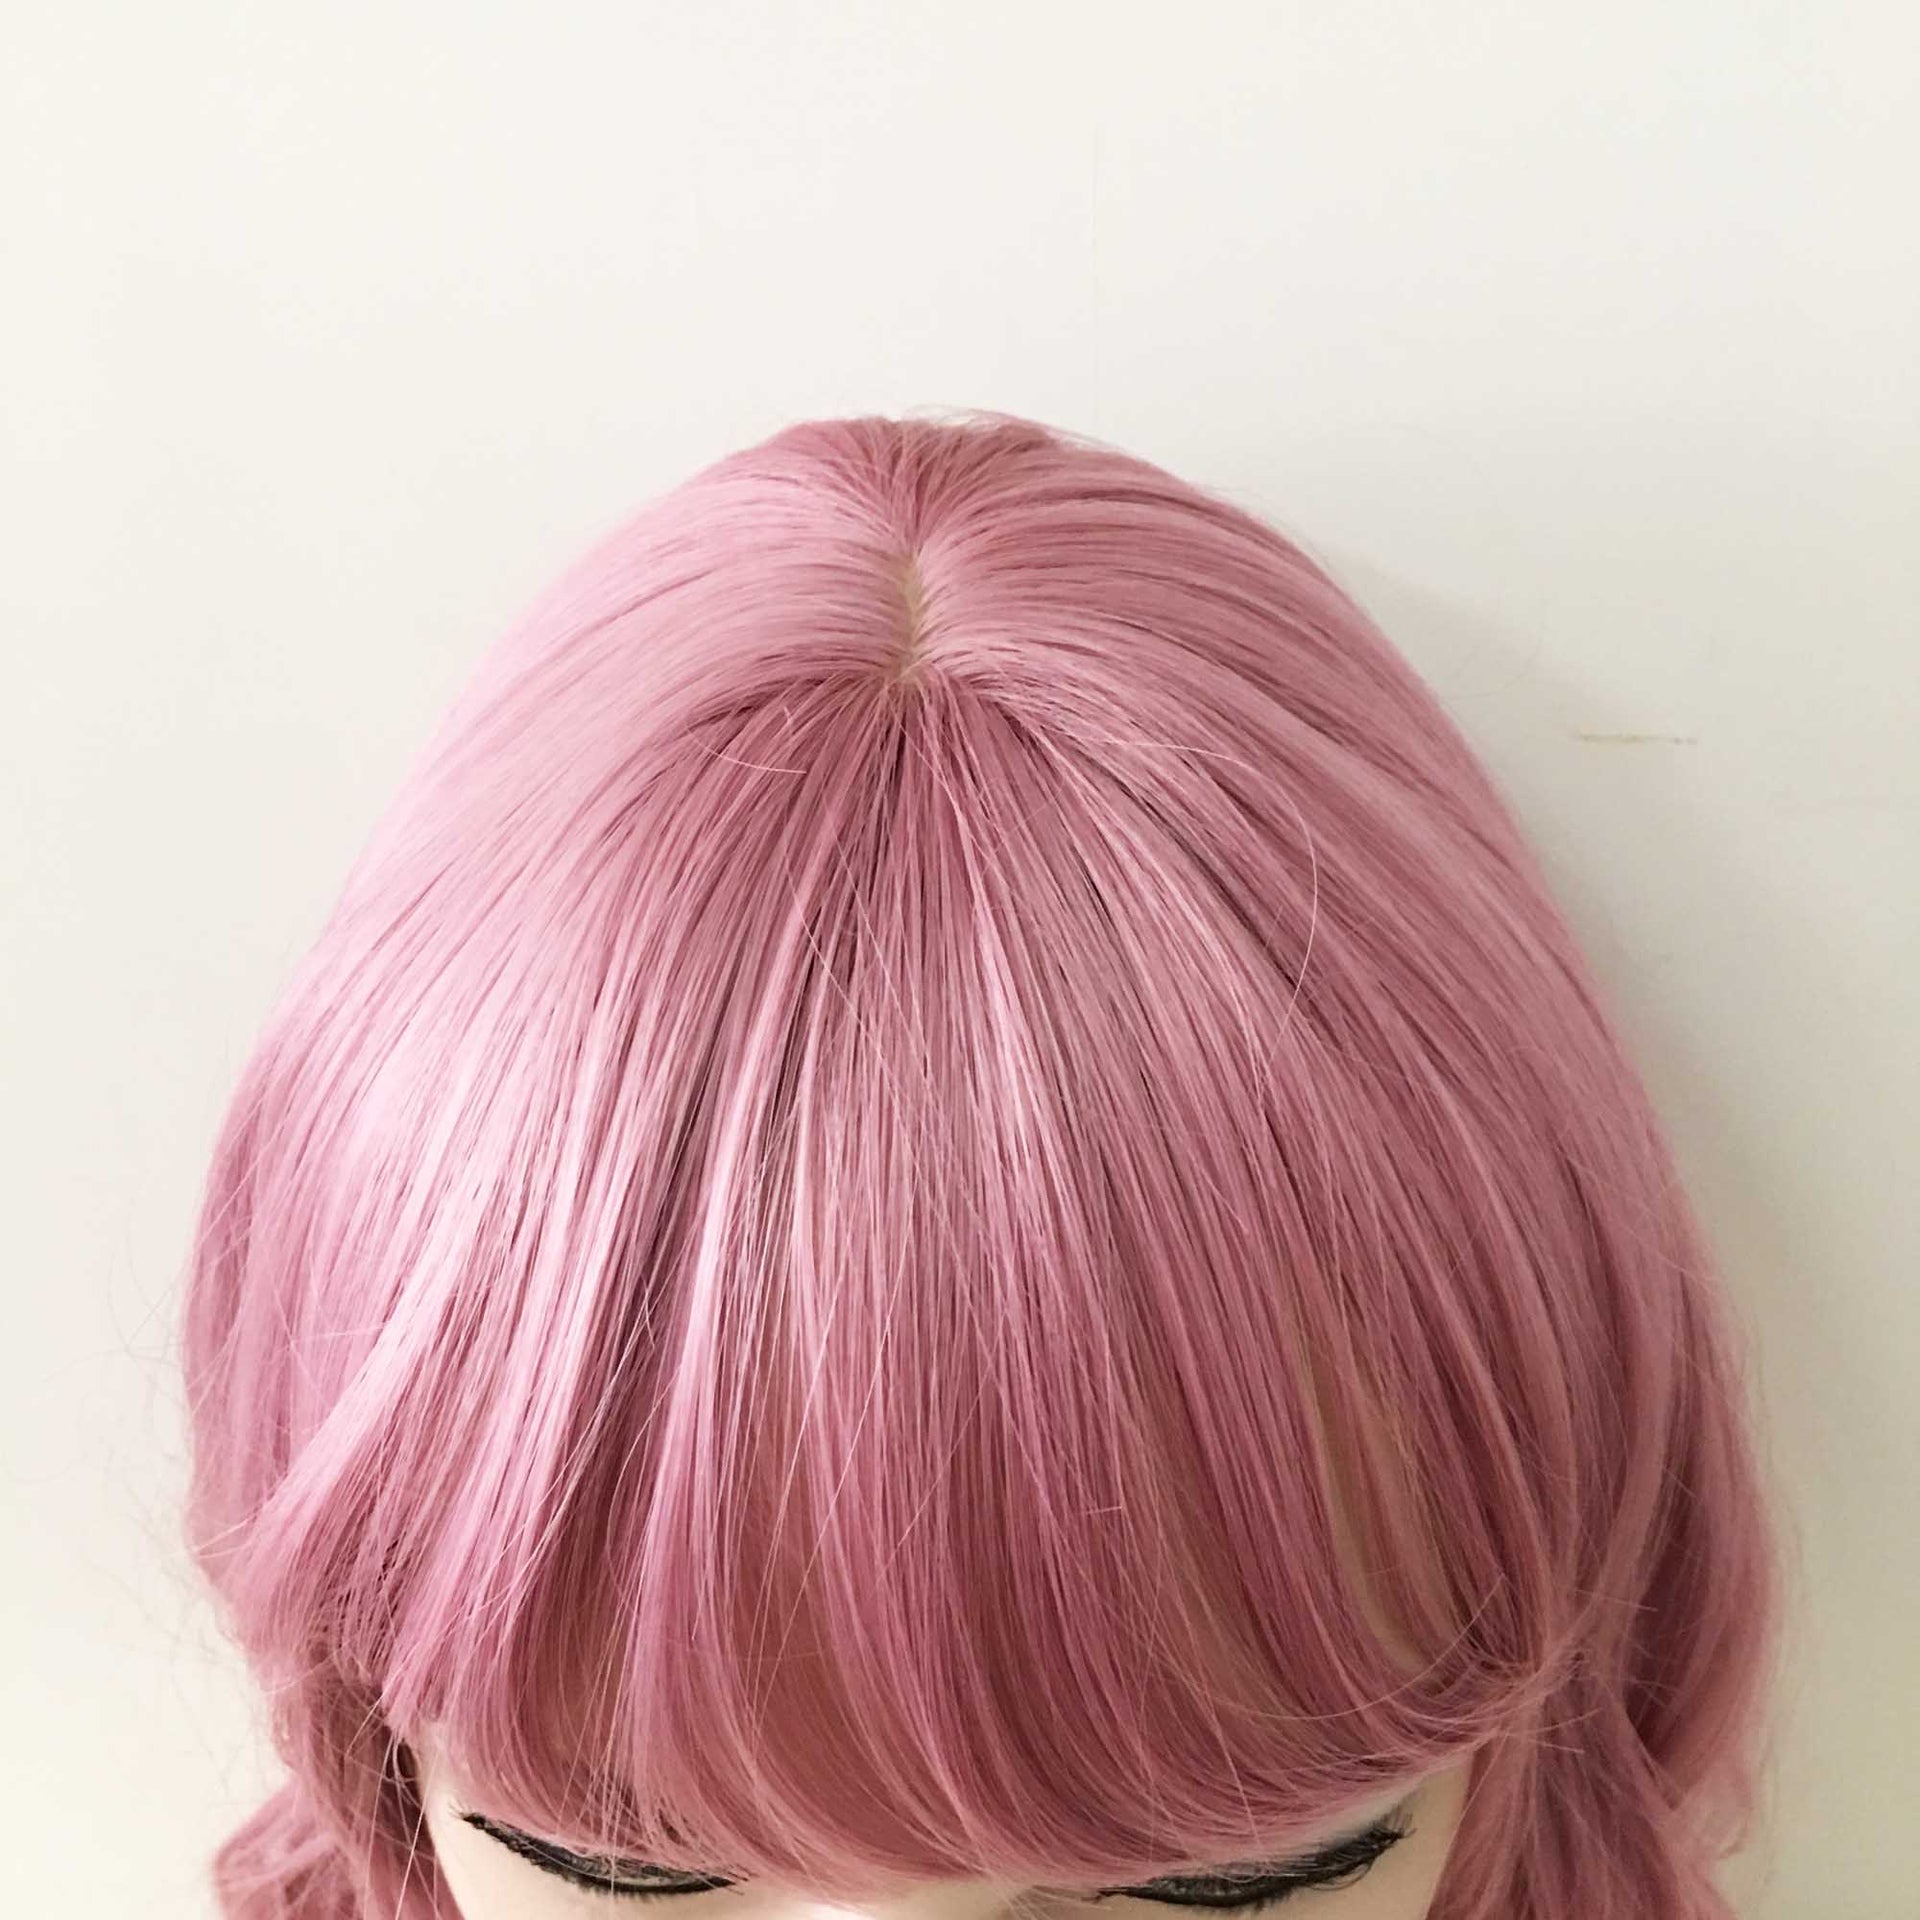 nevermindyrhead Women Pink Short Wavy Bob Fringe Bangs Wig